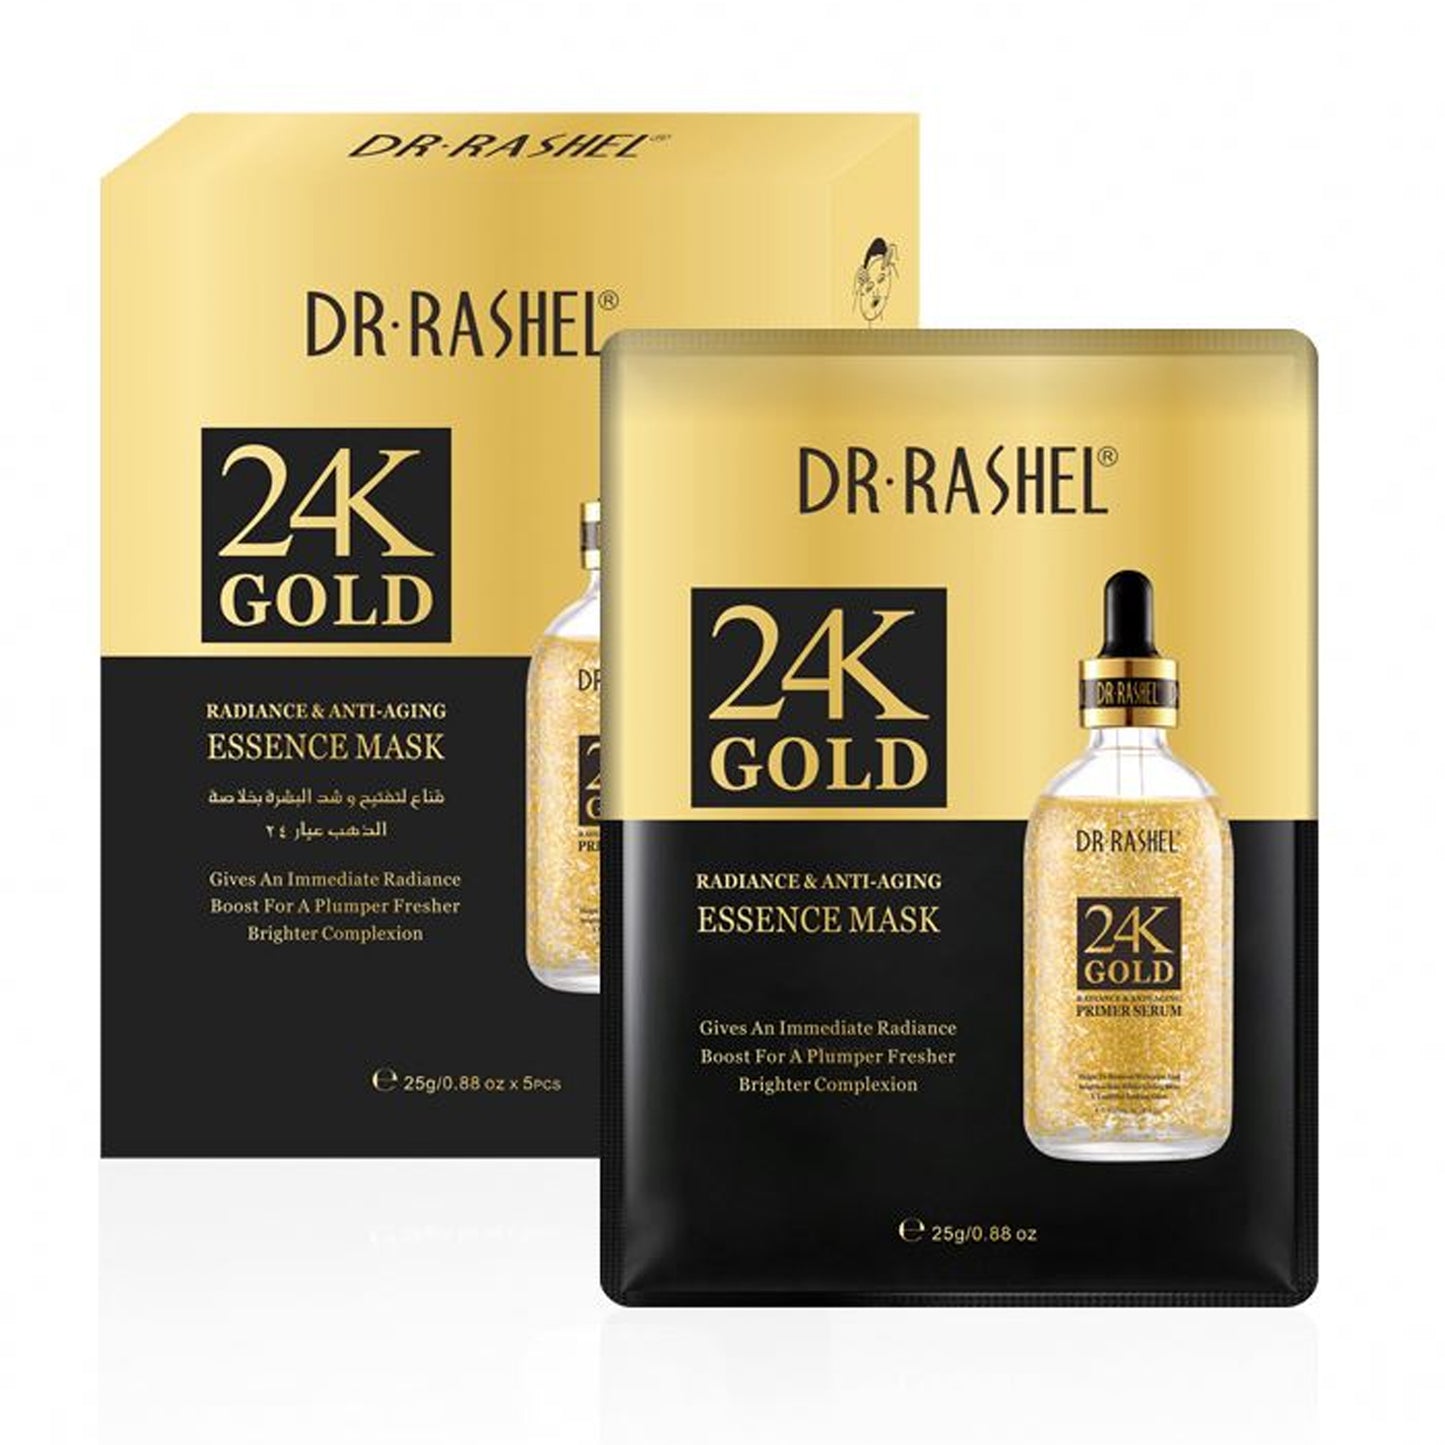 DR. RASHEL - 24K GOLD RADIANCE & ANTI-AGEING ESSENCE MASK (5 SHEETS)